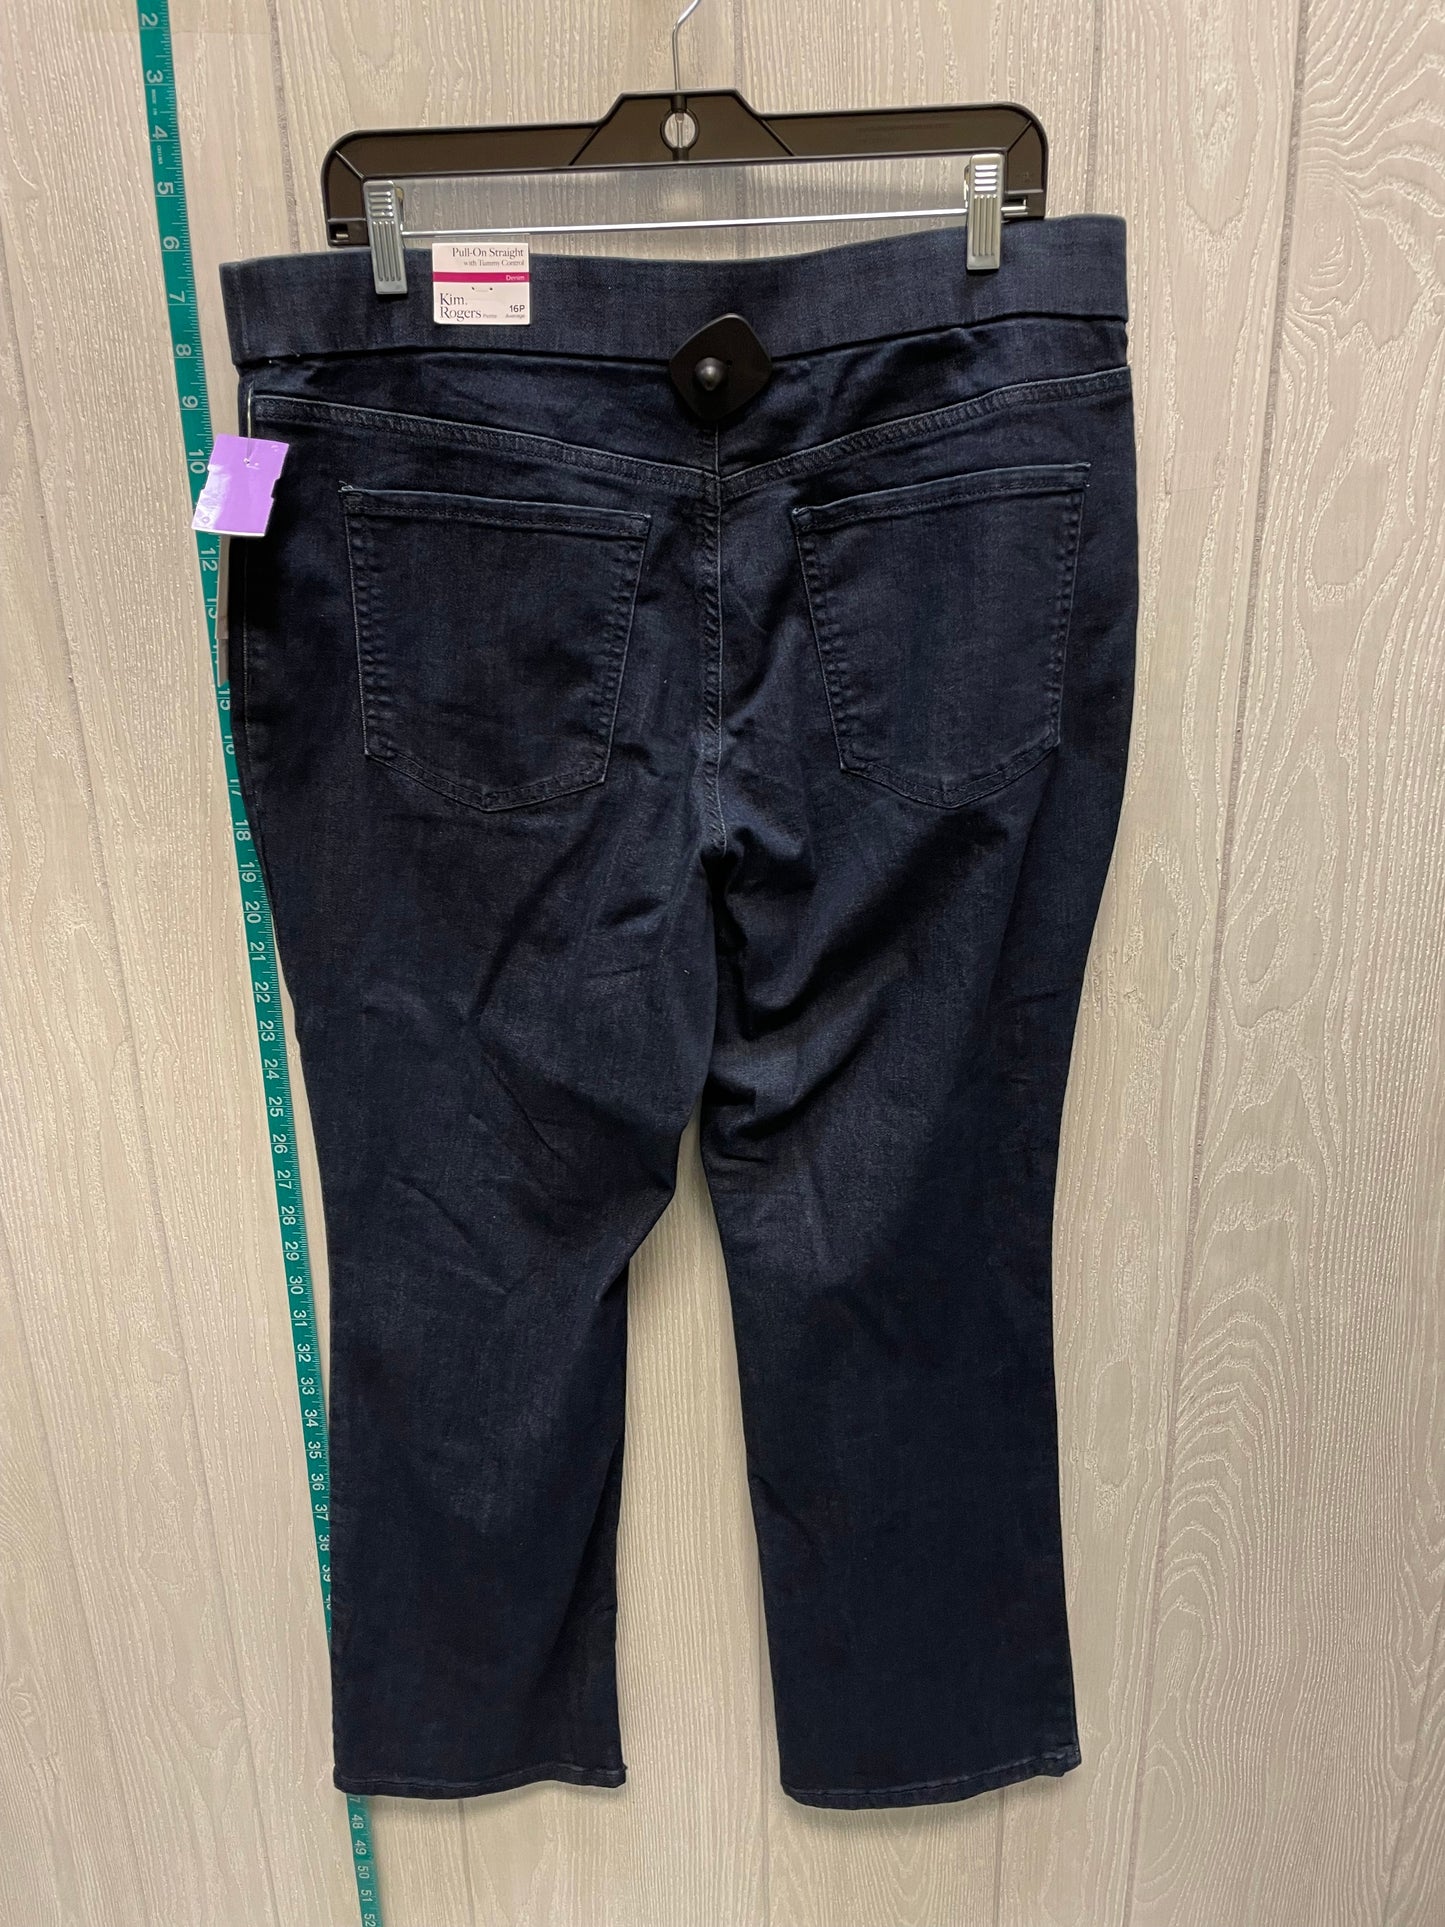 Blue Denim Jeans Jeggings Kim Rogers, Size 16